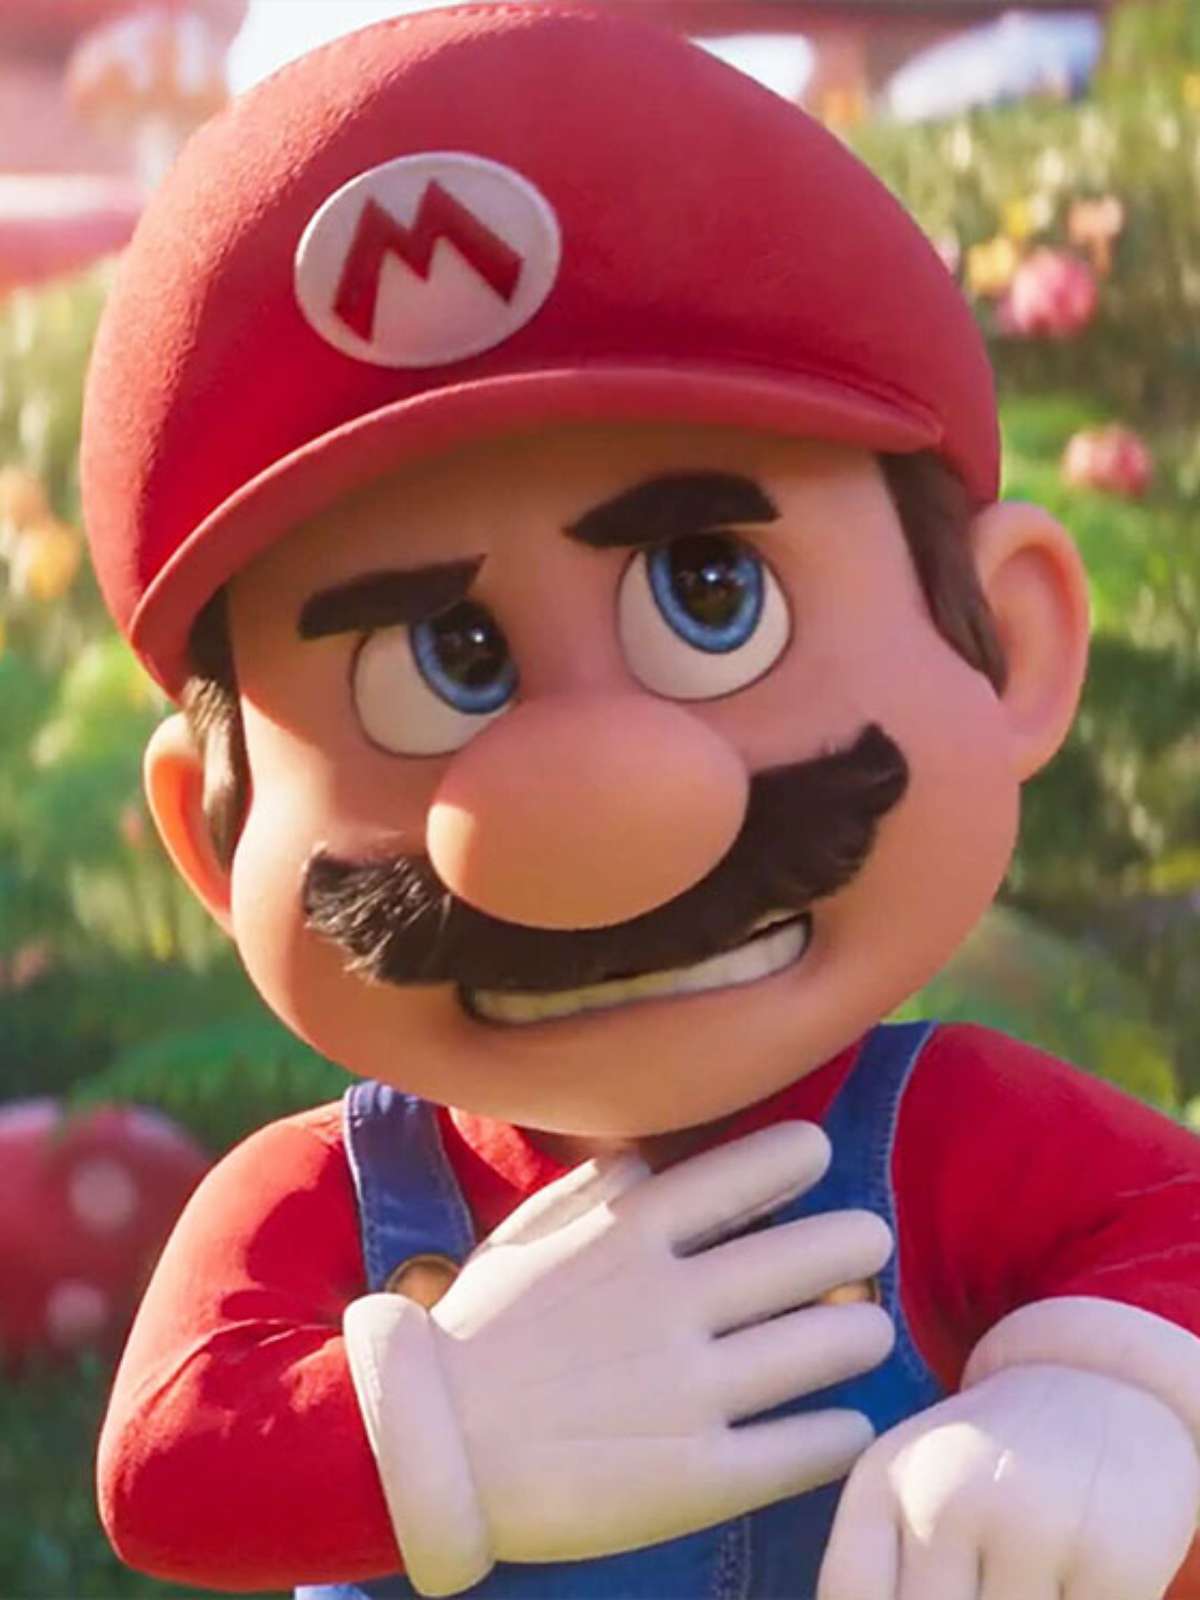 Nintendo divulga pôster e anuncia trailer do Super Mario Bros: O